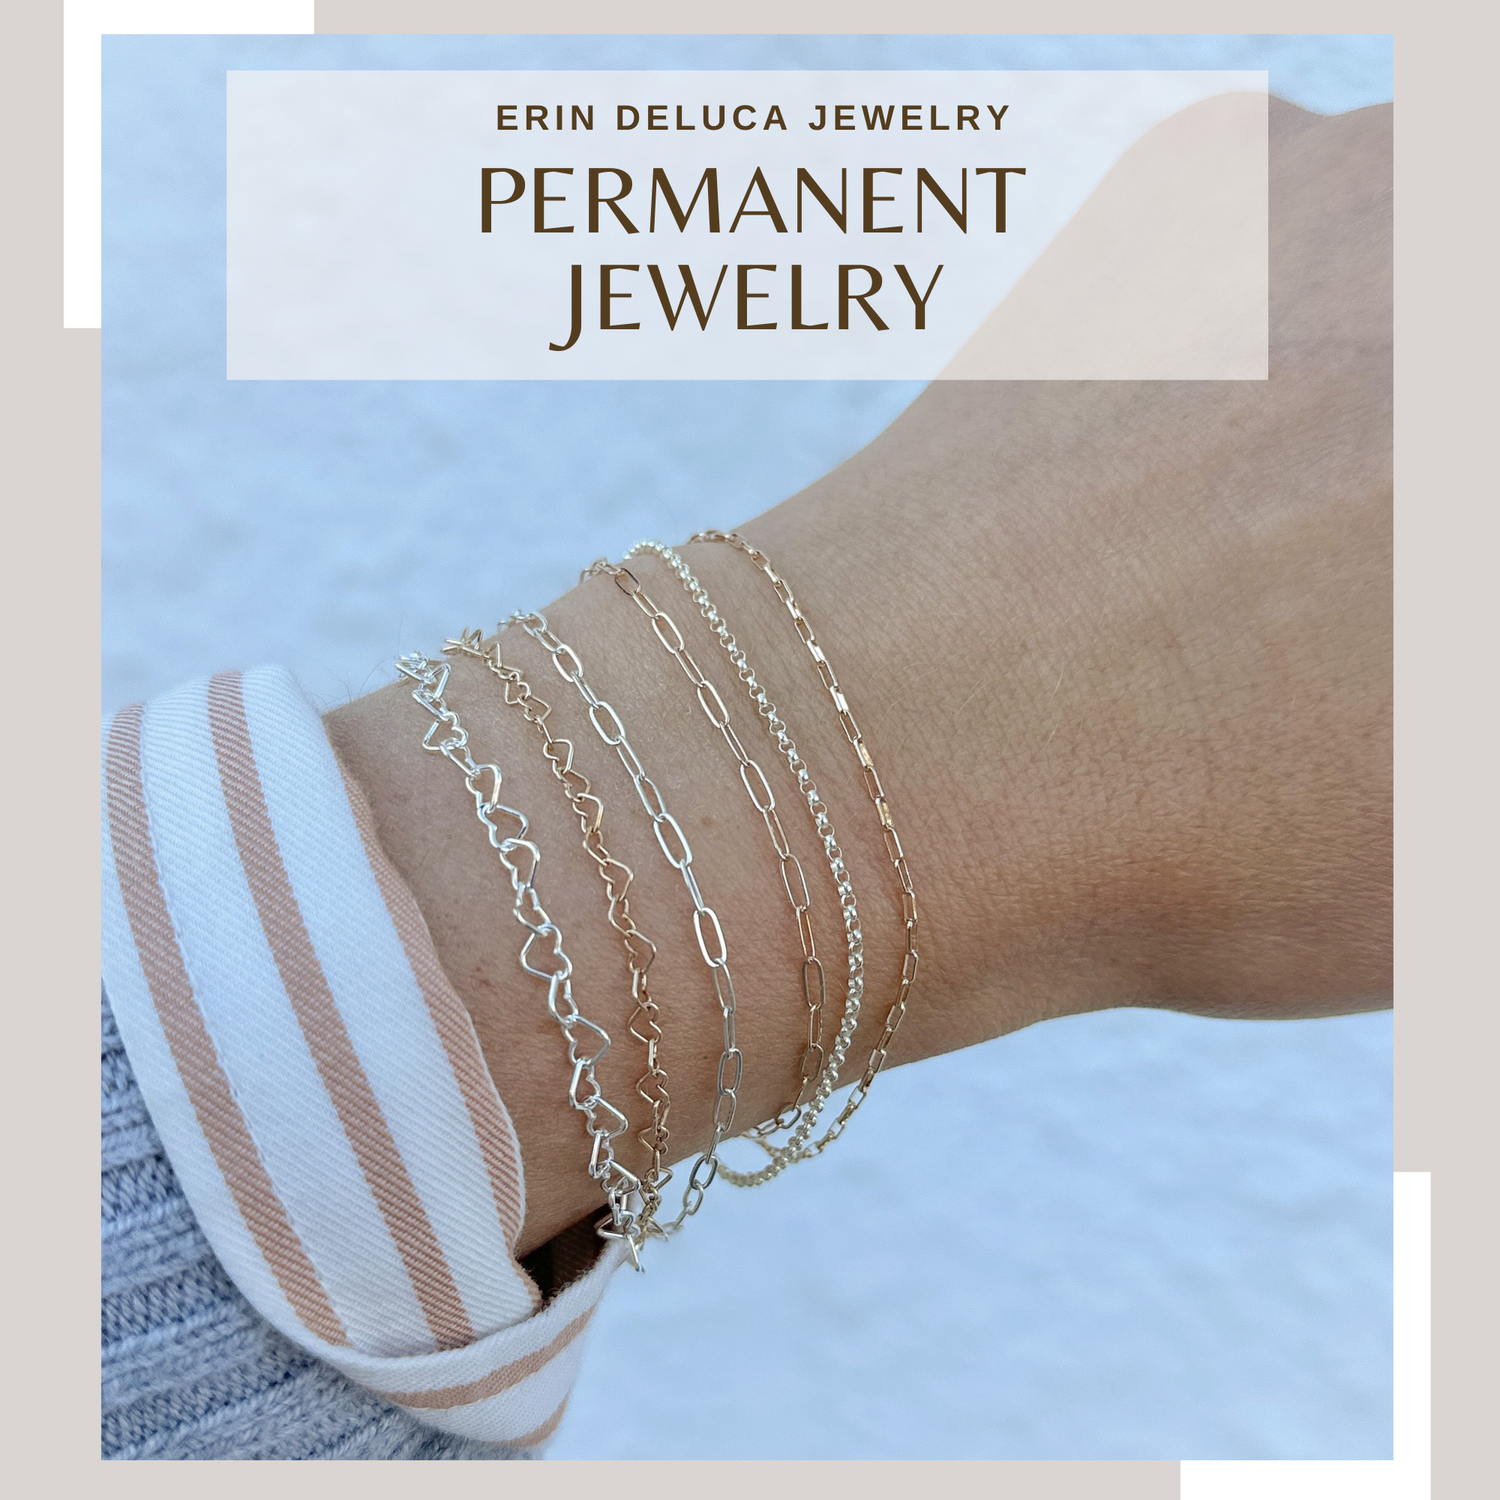 Permanent Jewelry Repair